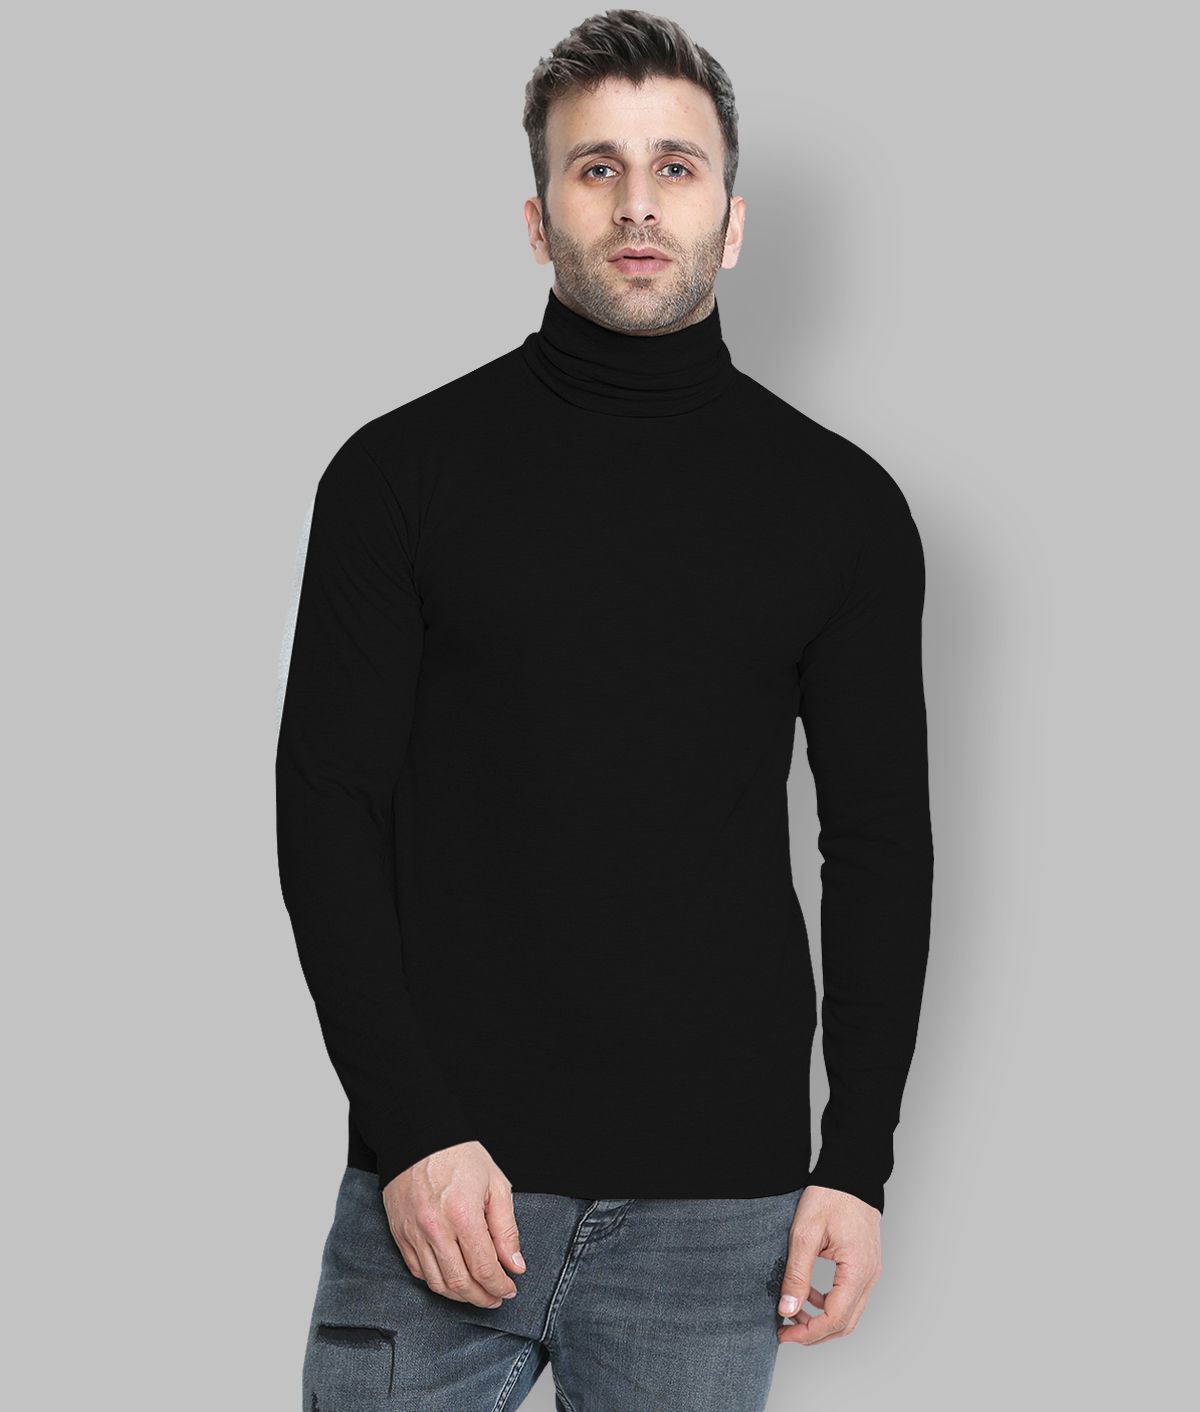 Chkokko Polyester Cotton Black Solids T-Shirt